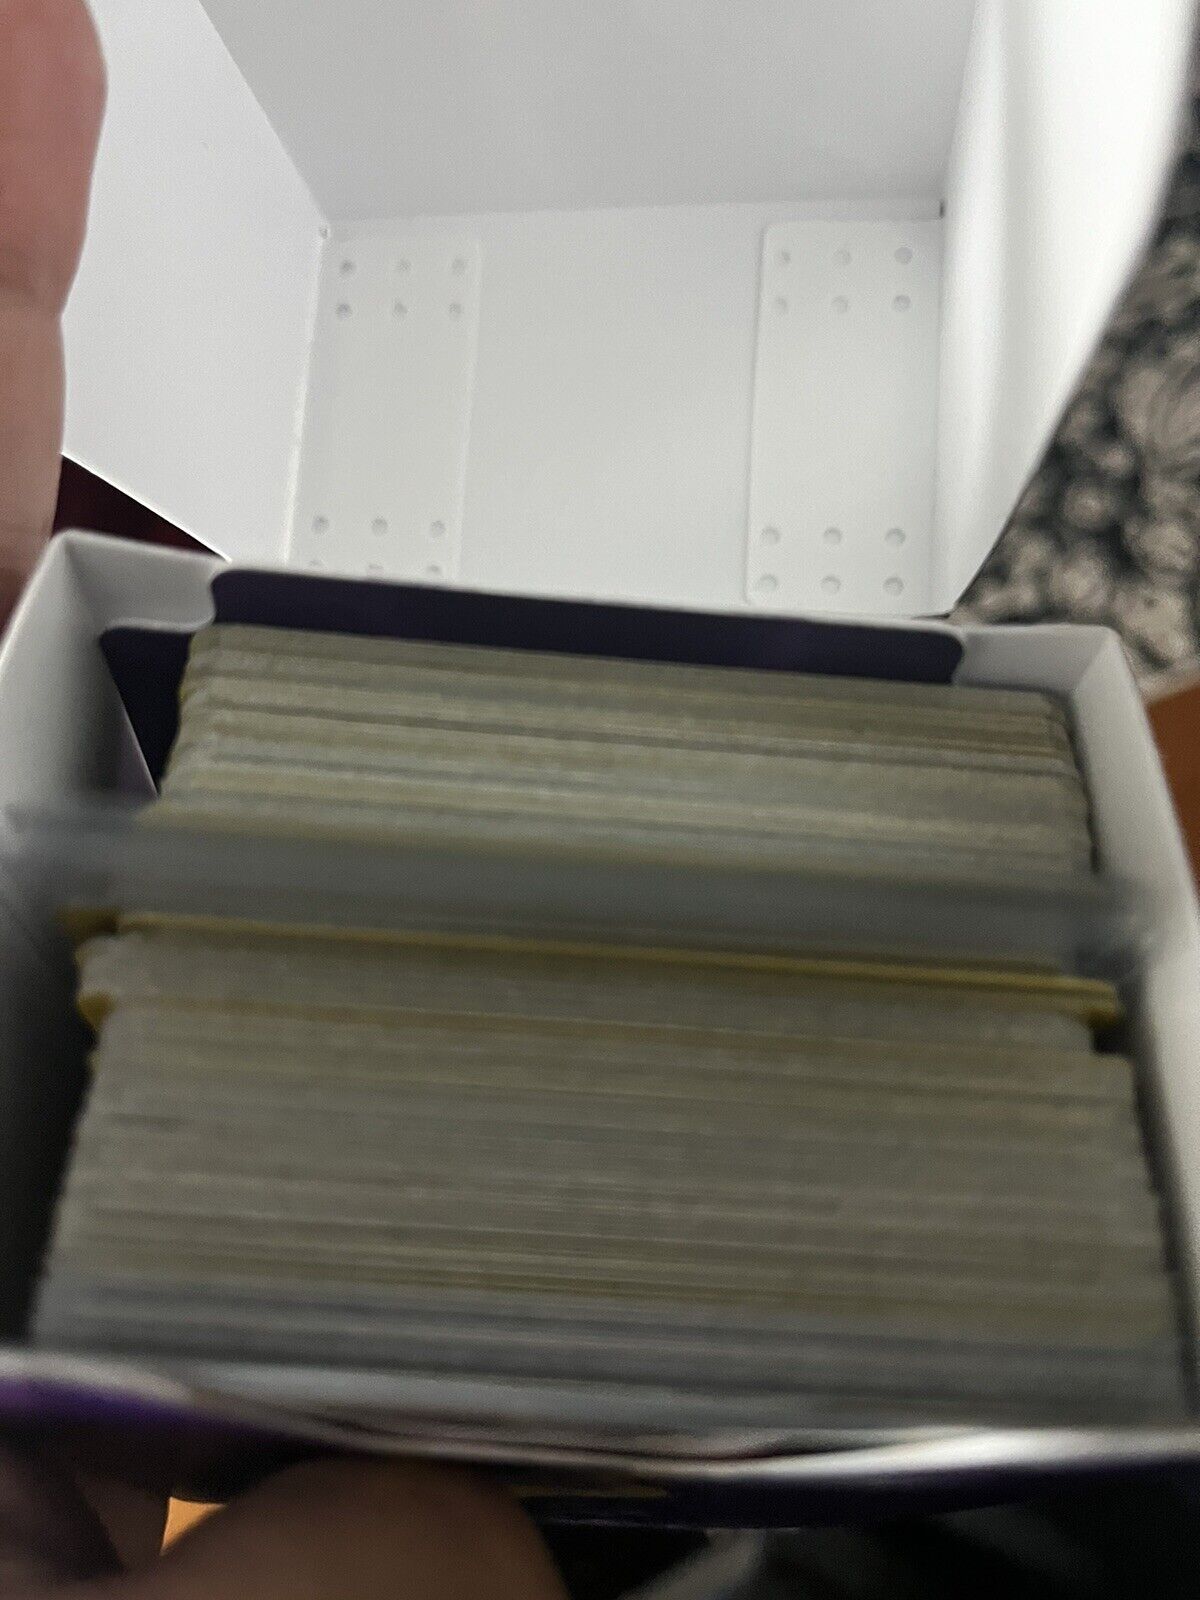 Lot of 150 Authentic Pokemon Cards Mystery Mint Bulk